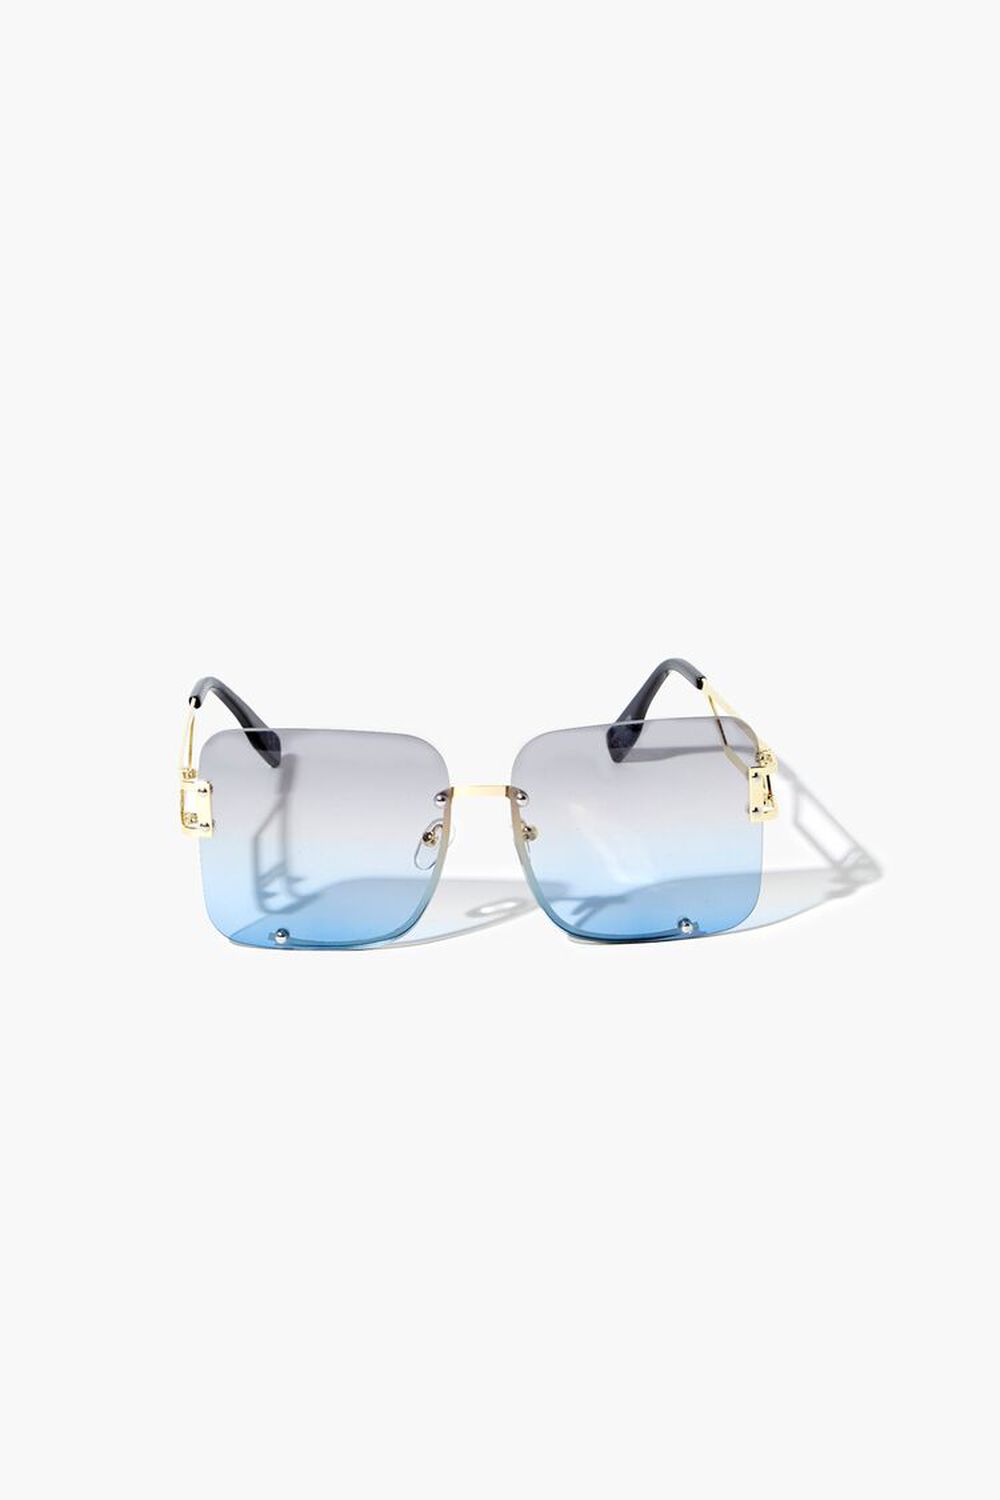 GOLD/BLUE Gradient Square Sunglasses, image 1